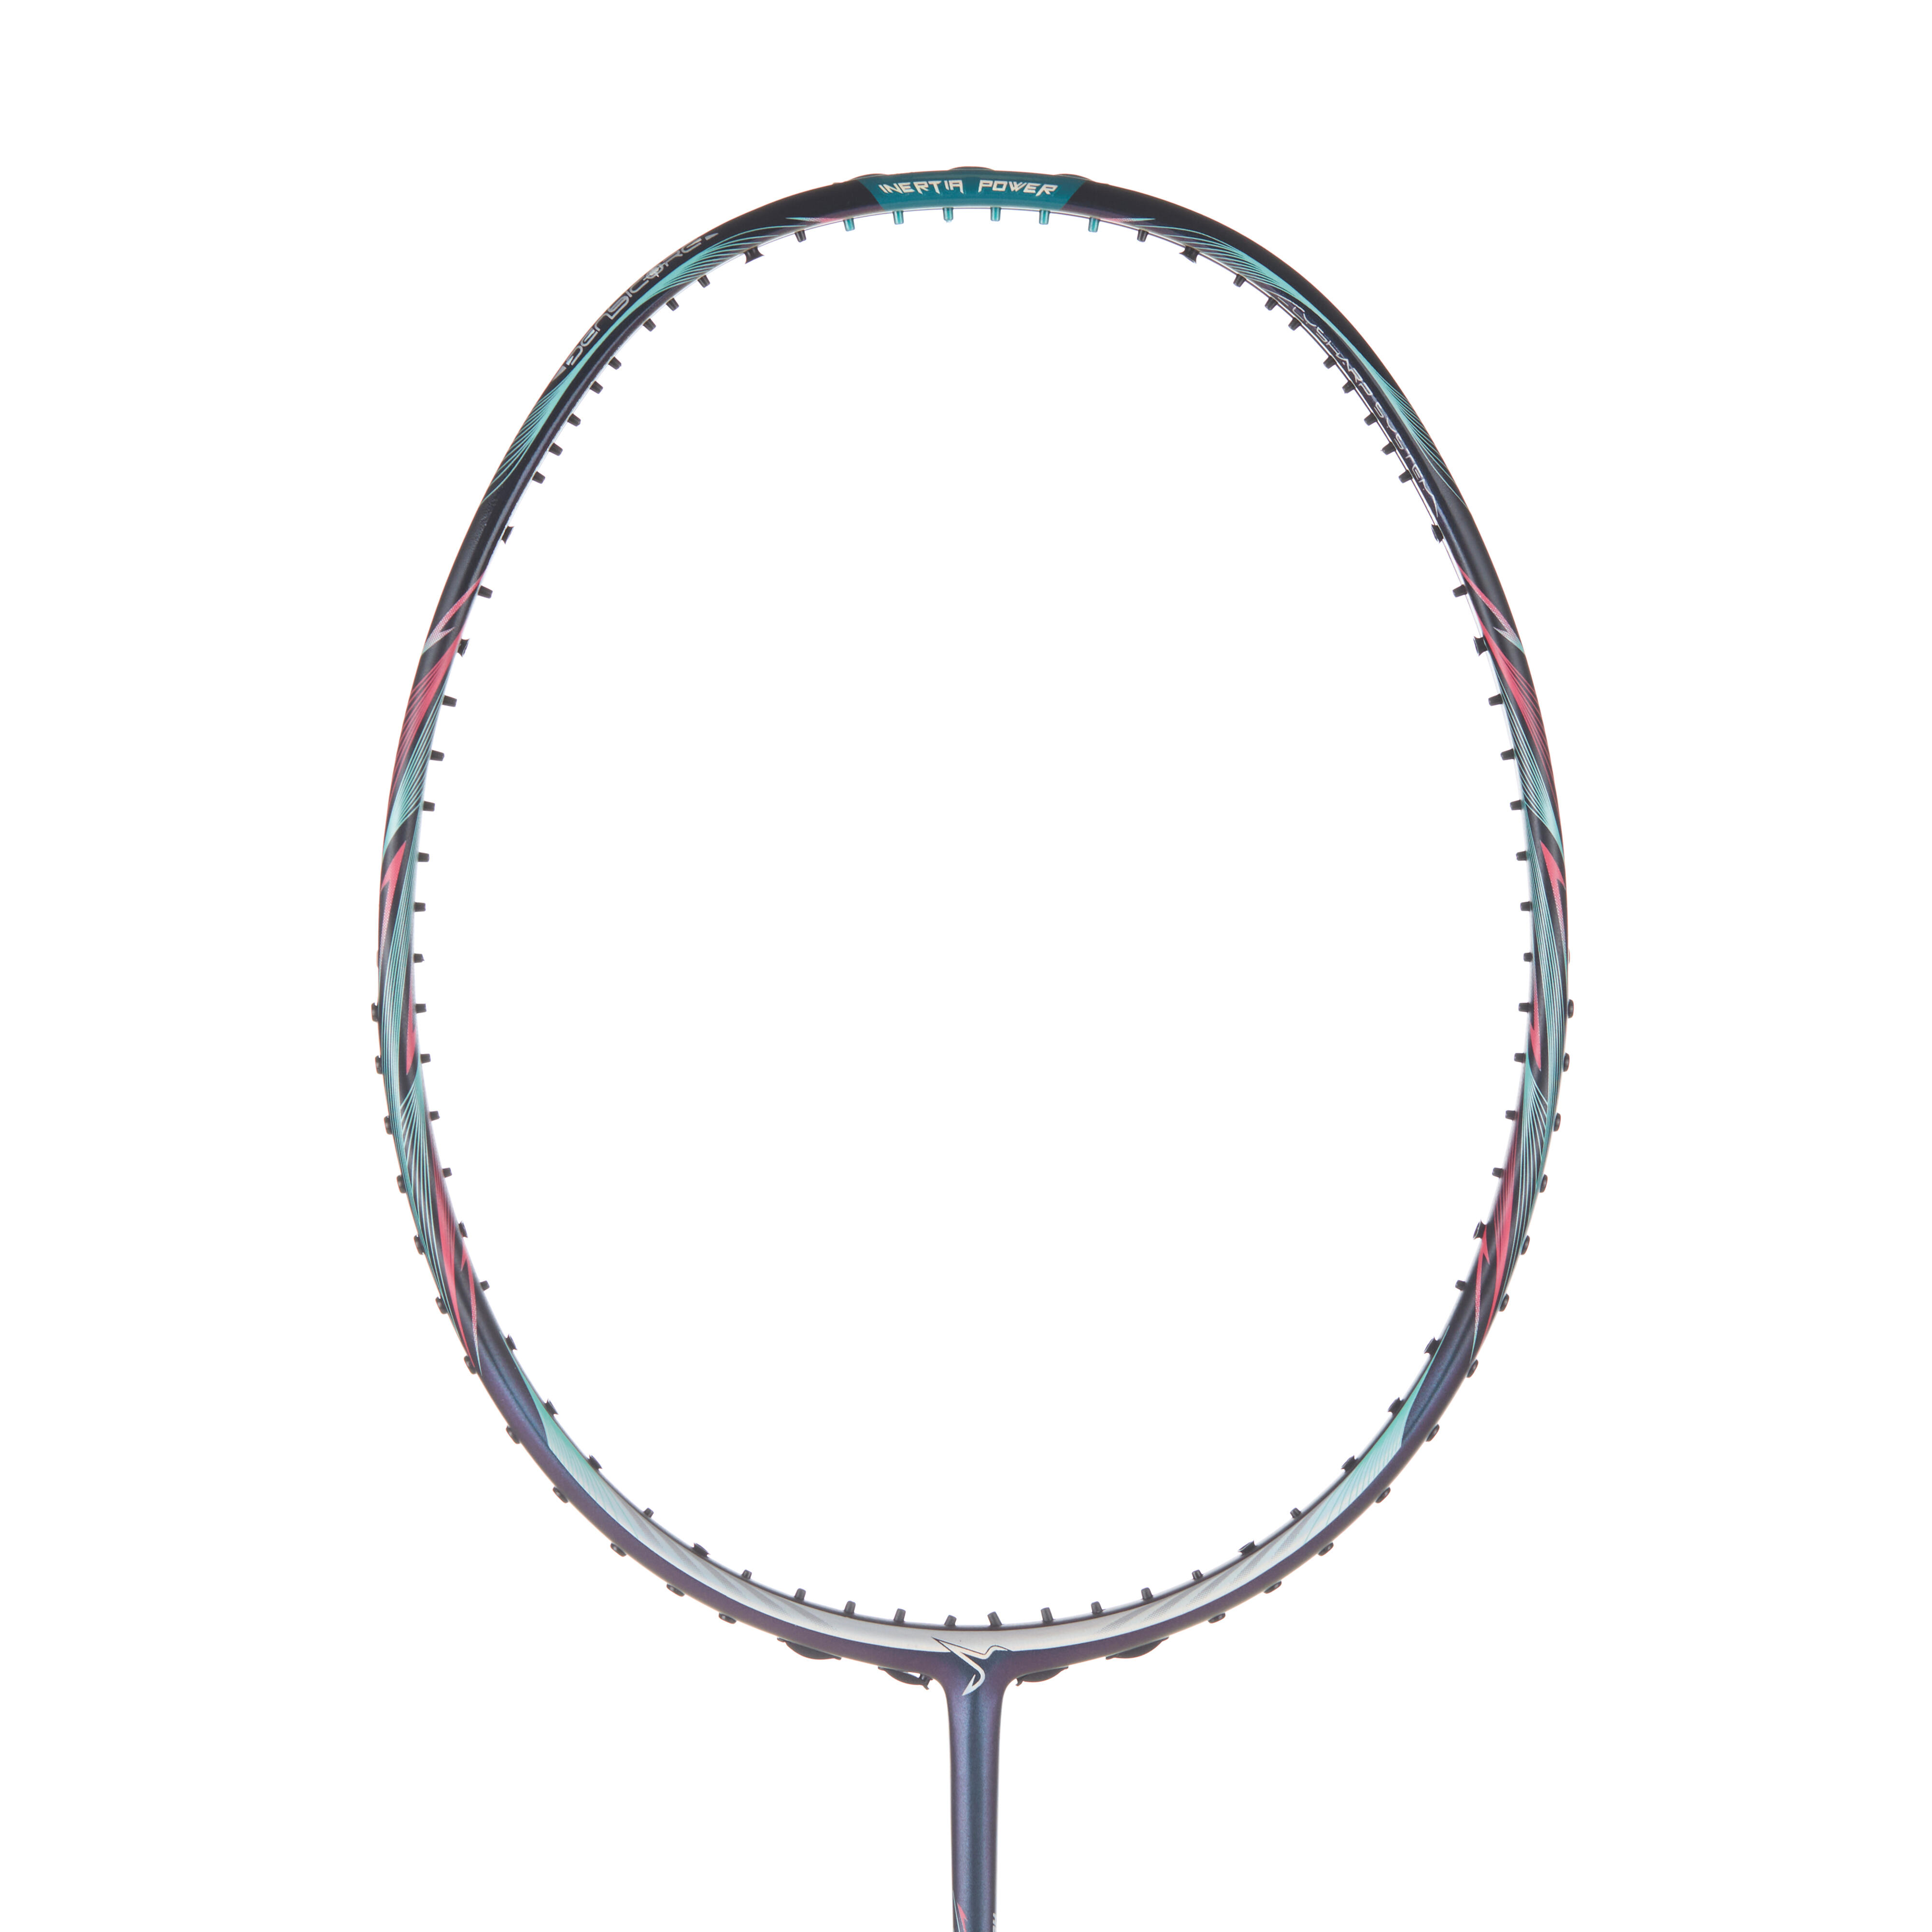 Unstrung Badminton Racket - BR Perform 990 Pro Purple - PERFLY